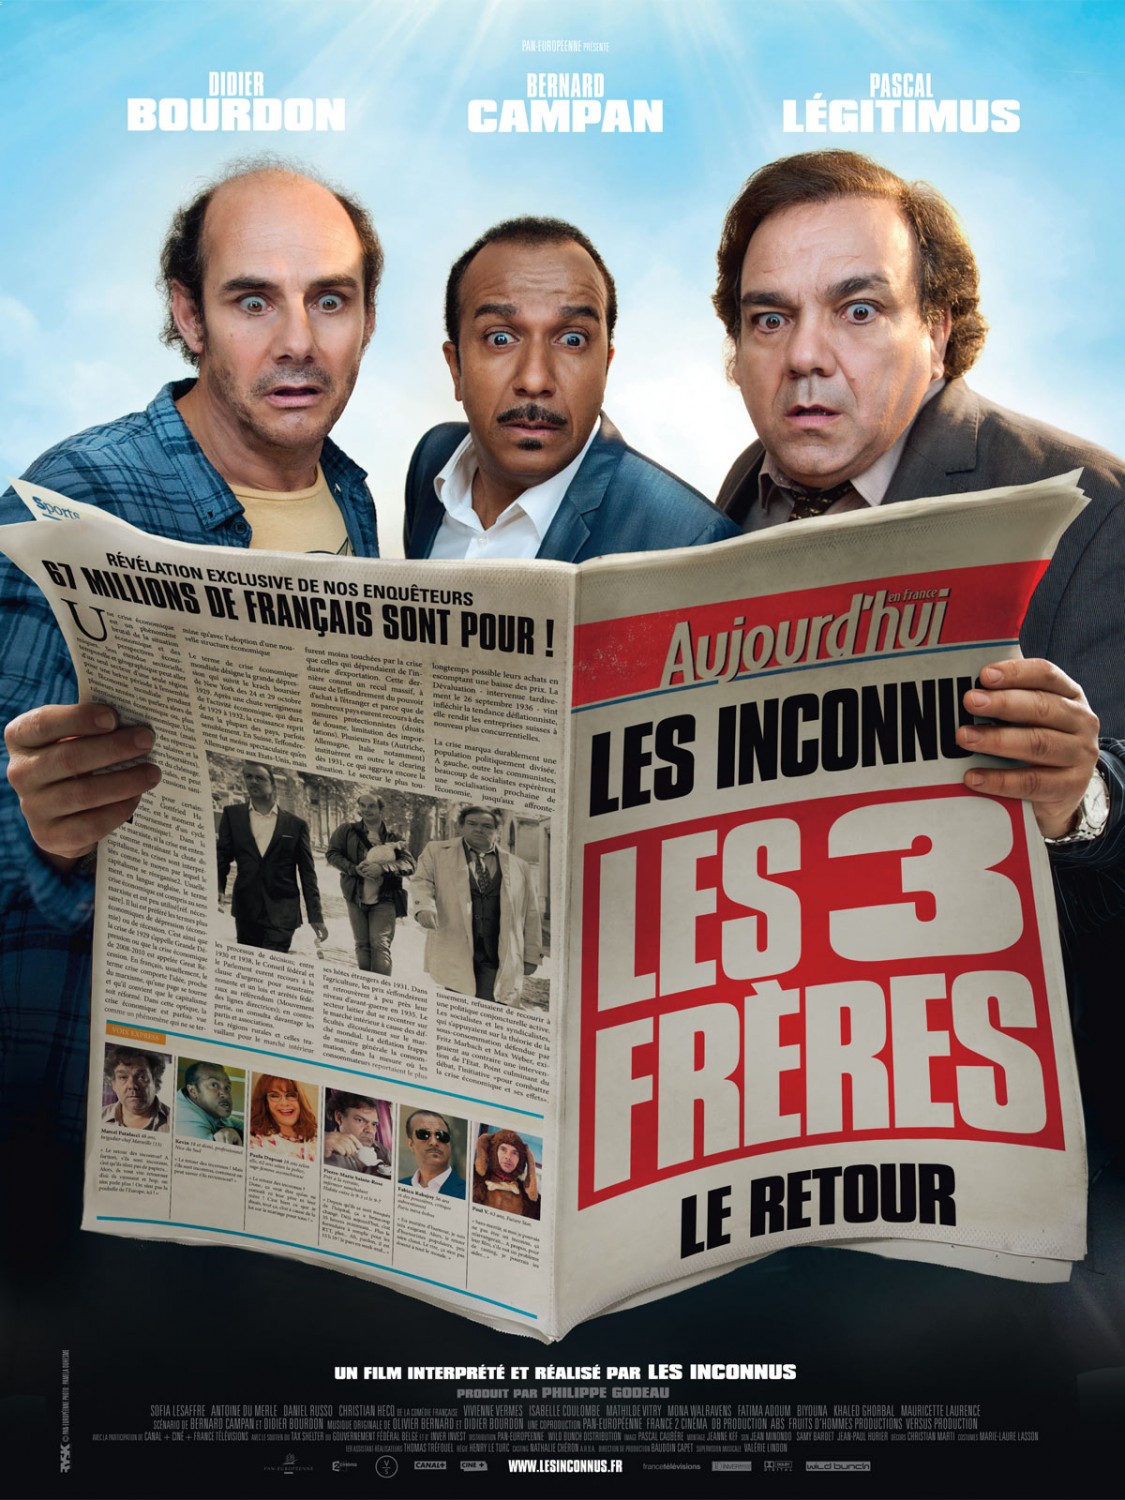 Extra Large Movie Poster Image for Les trois frères, le retour (#3 of 3)